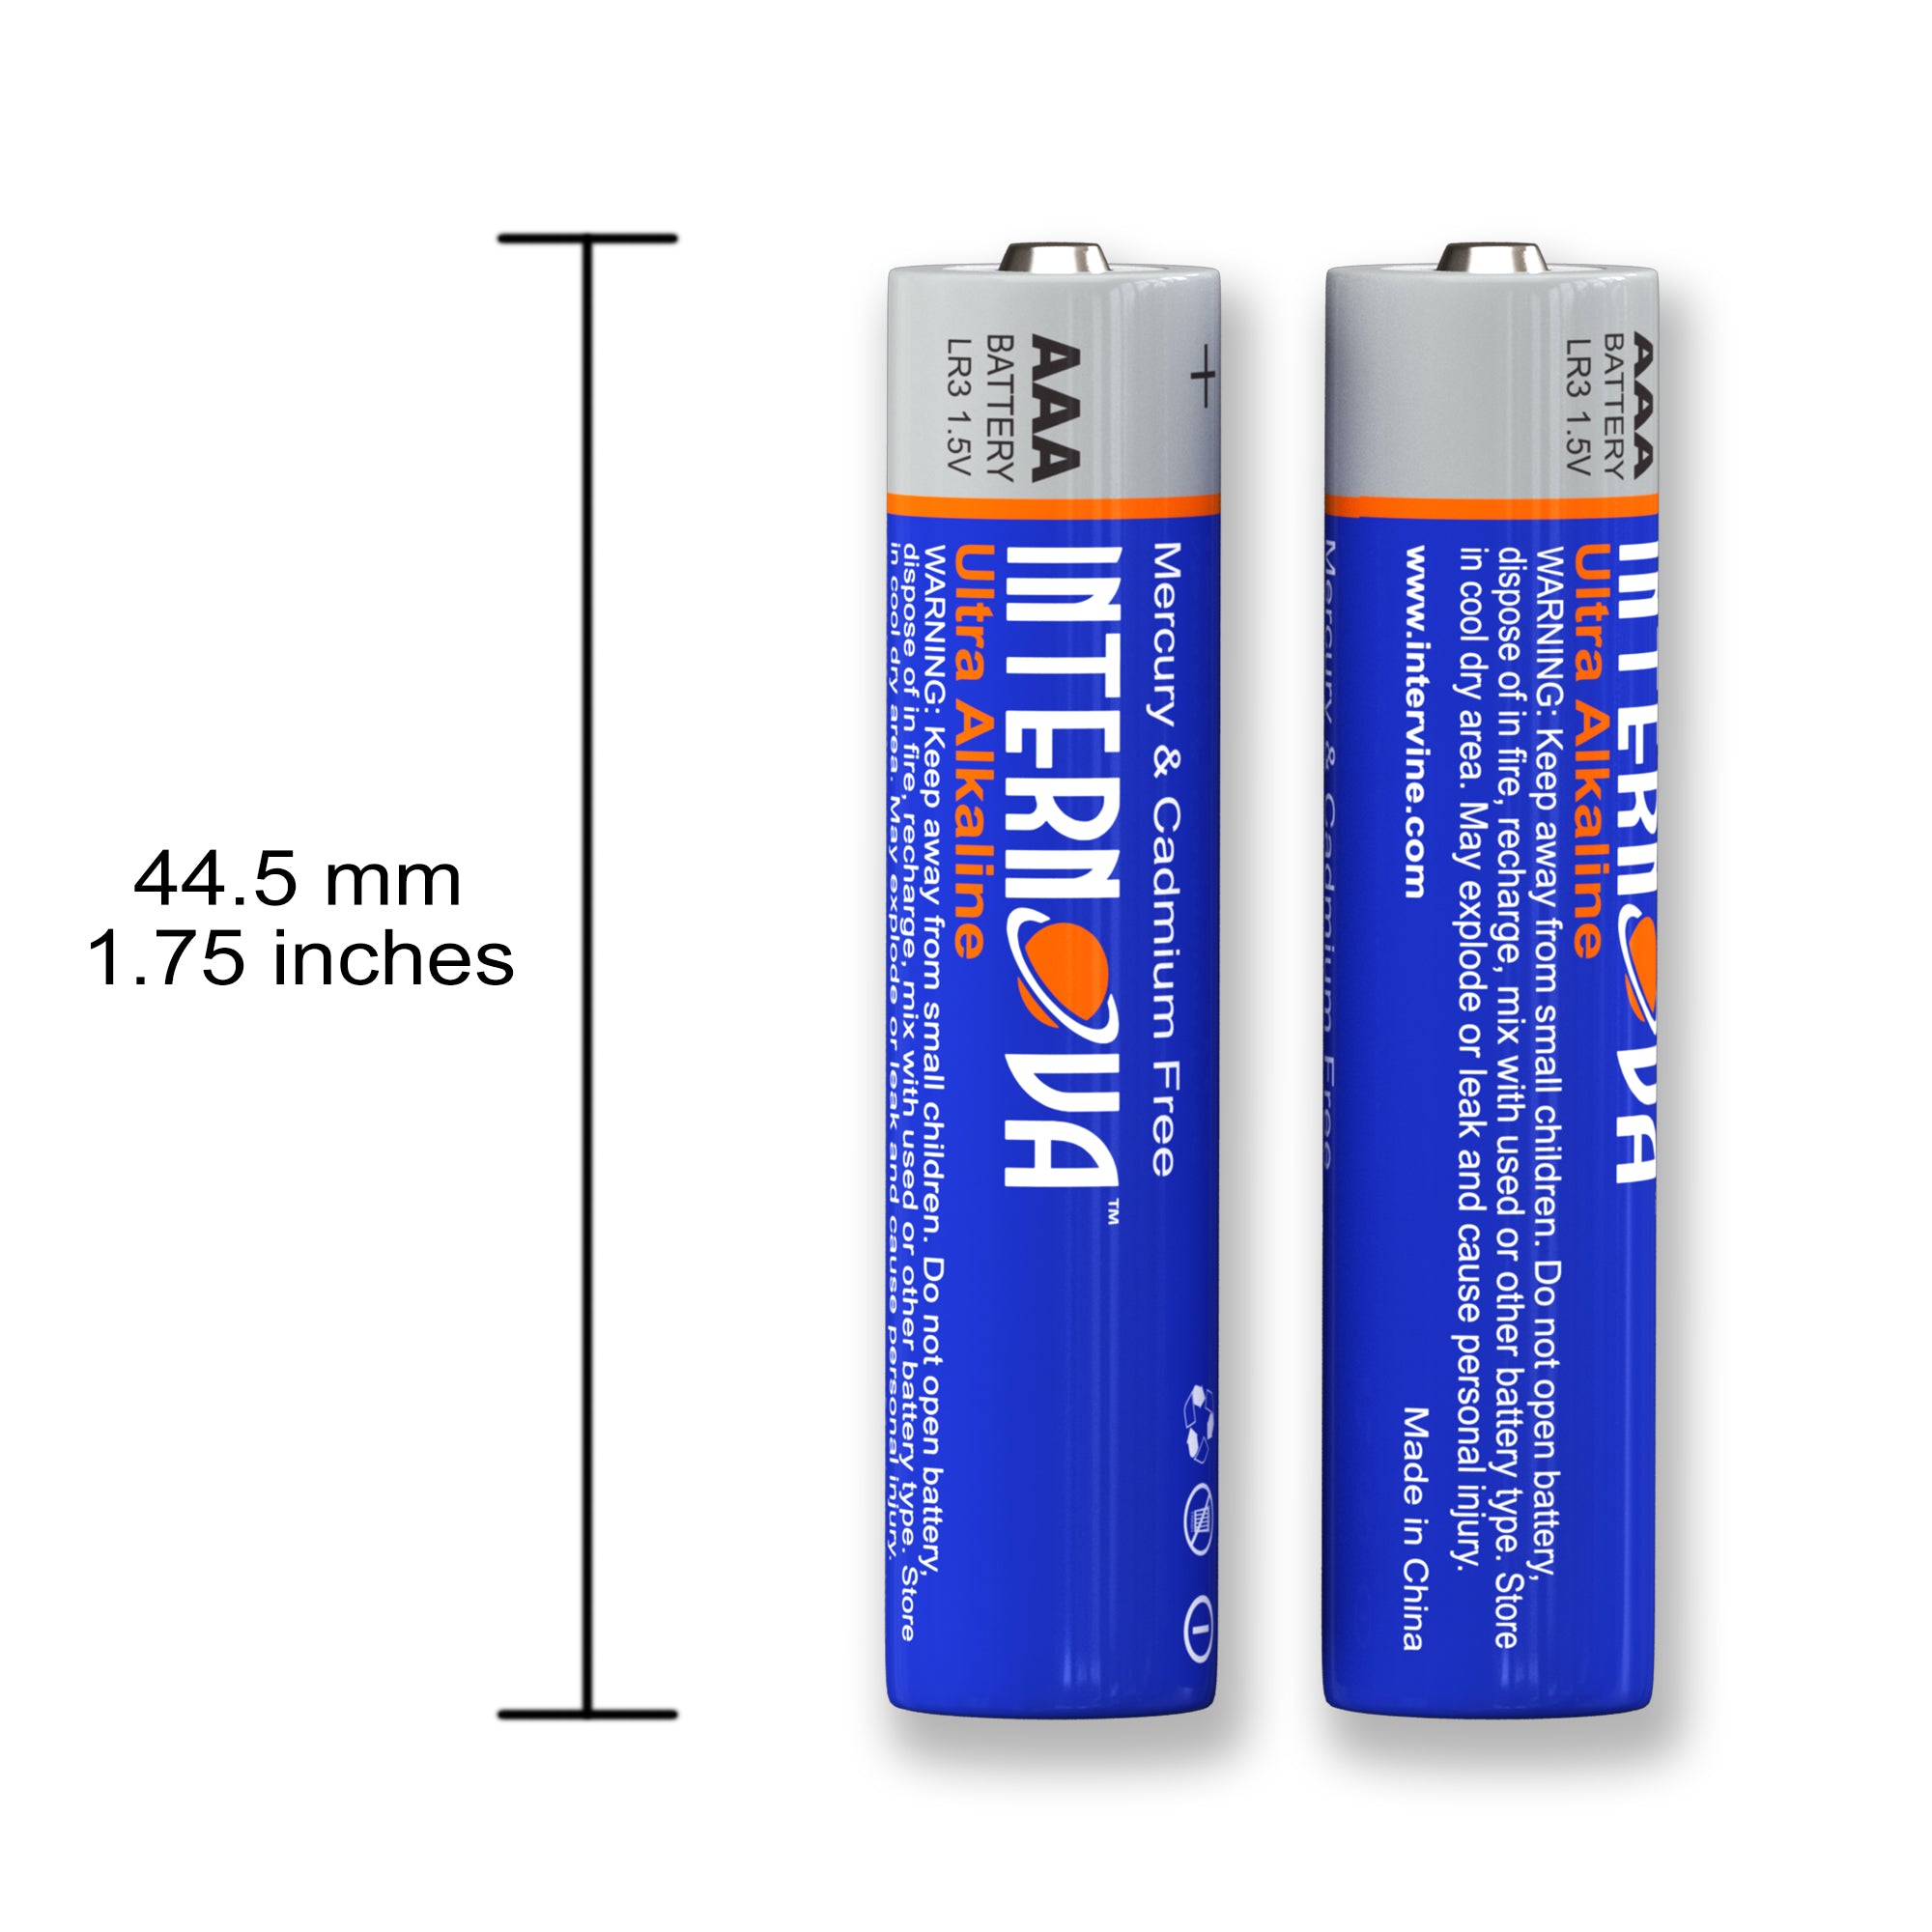 Internova Ultra Alkaline D Batteries, LR20 1.5V Cell High